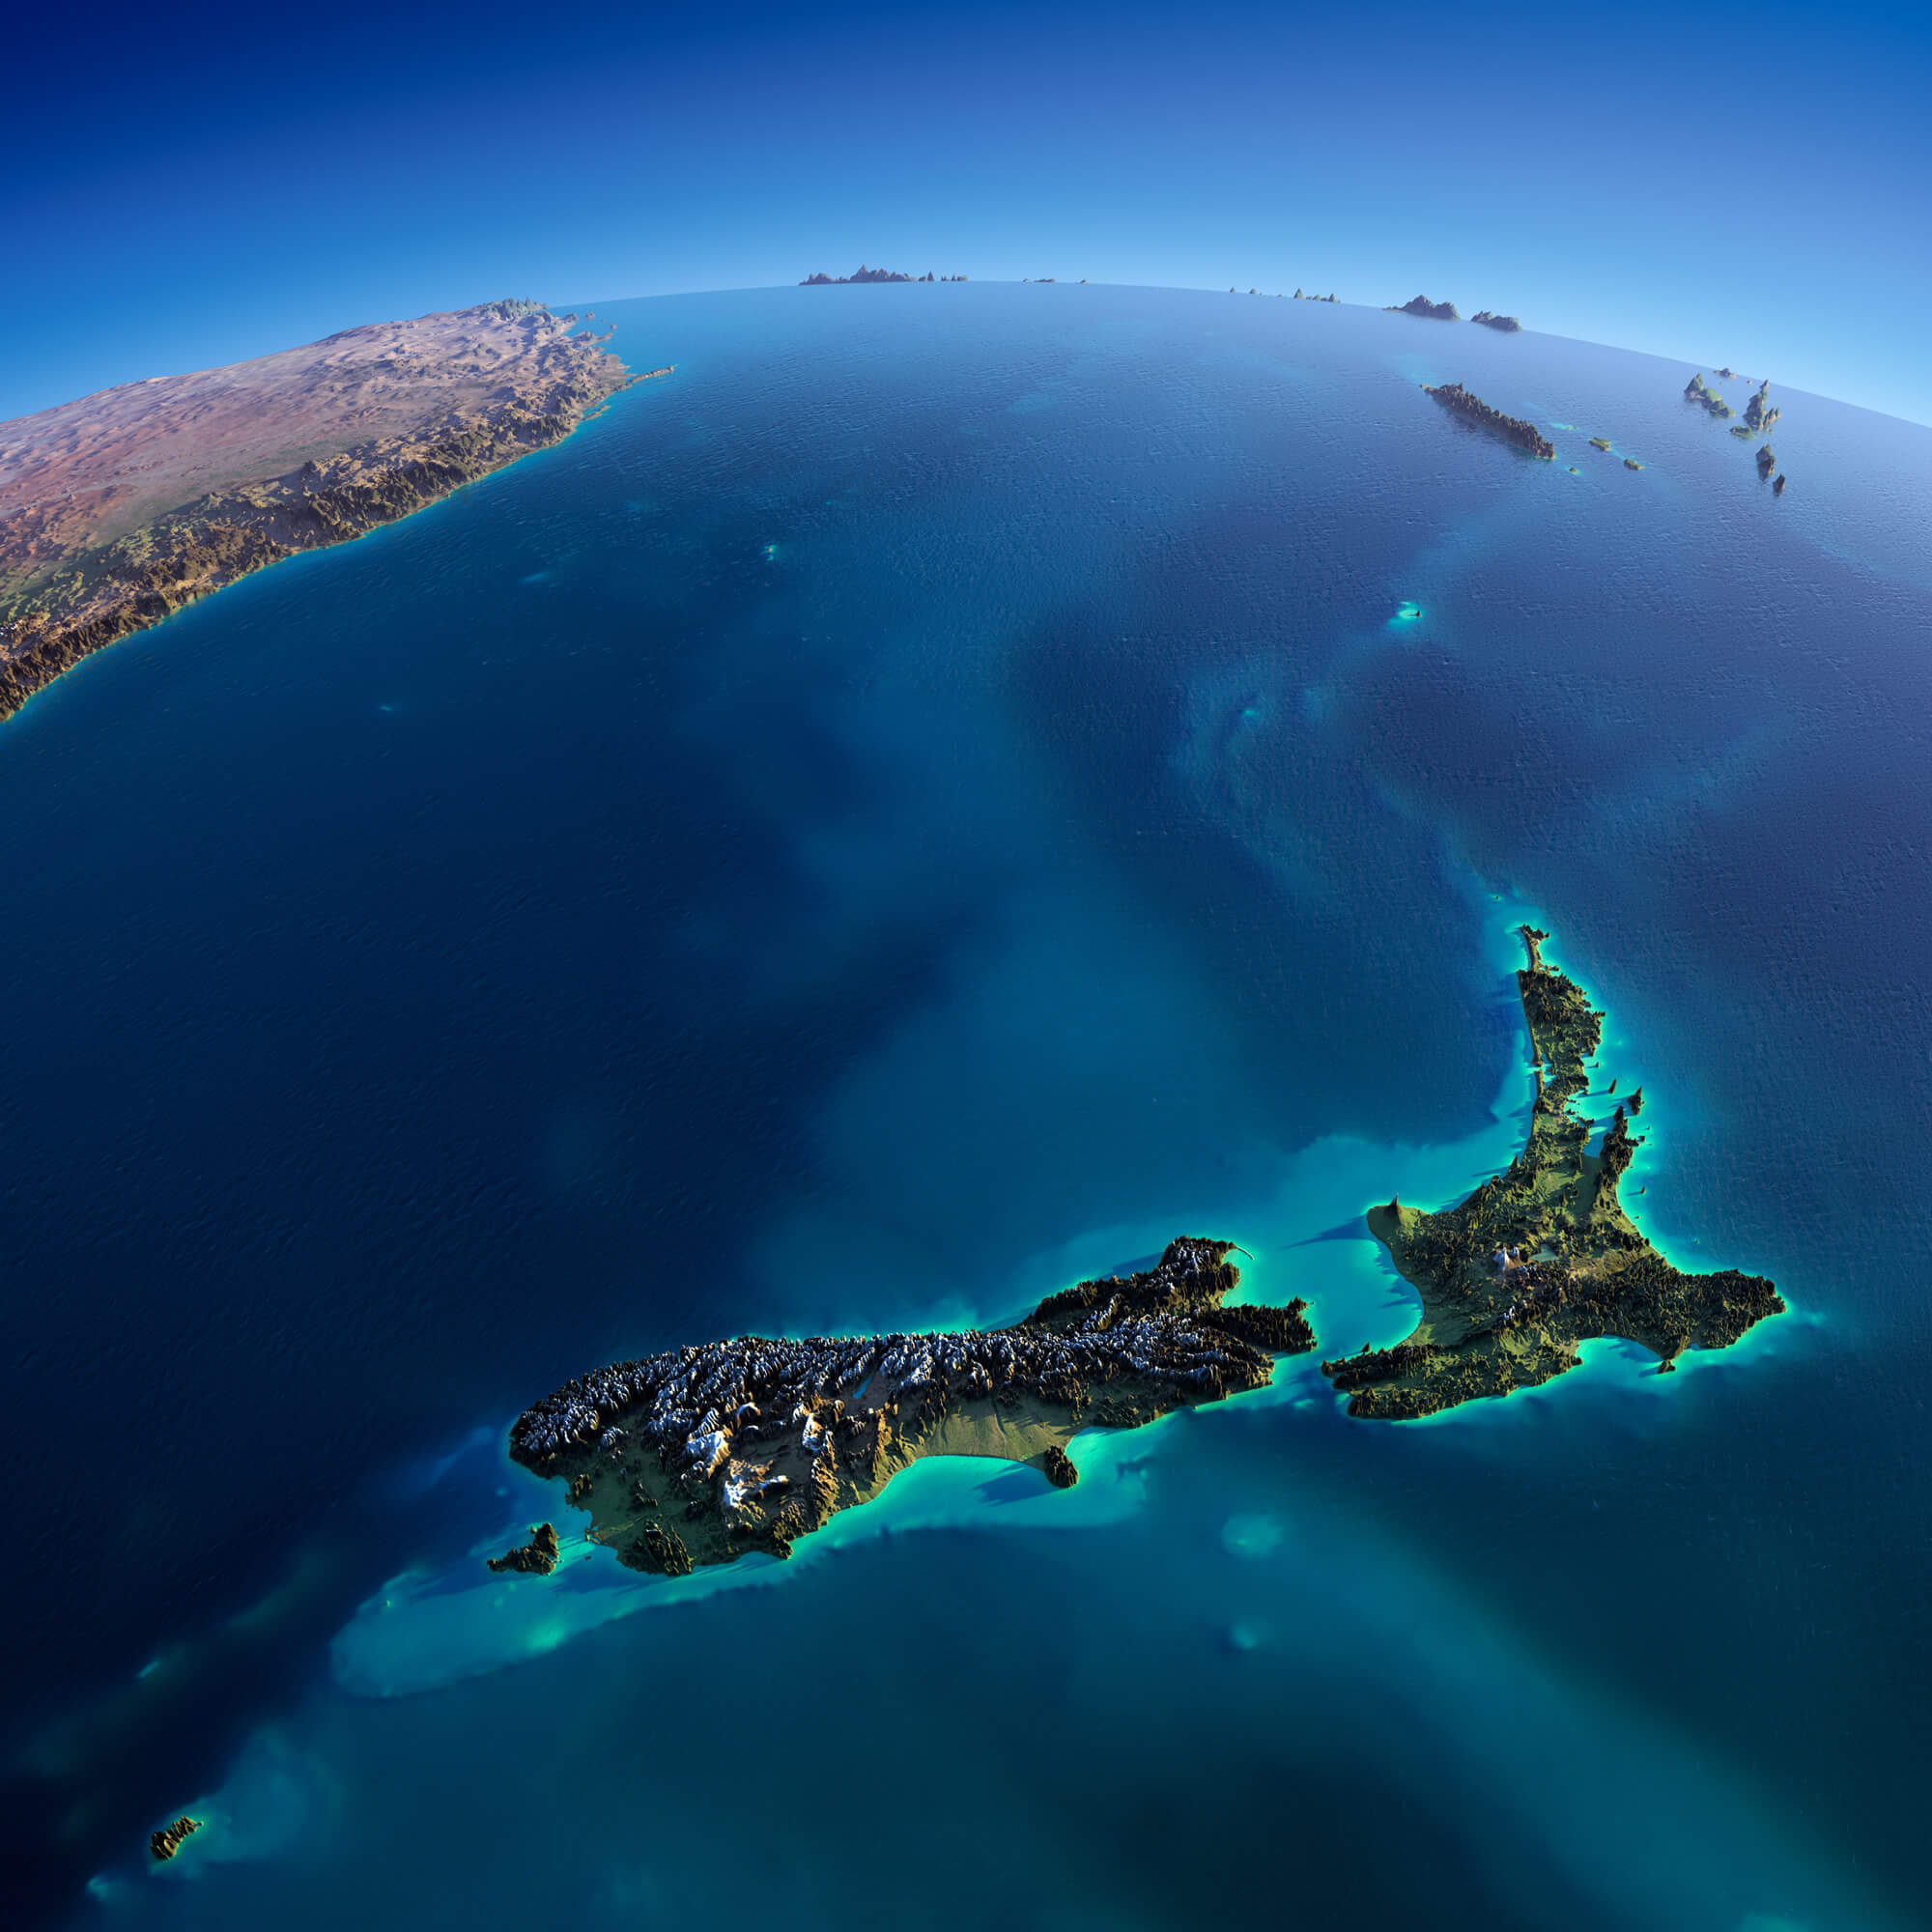 New Zealand Satellite Map